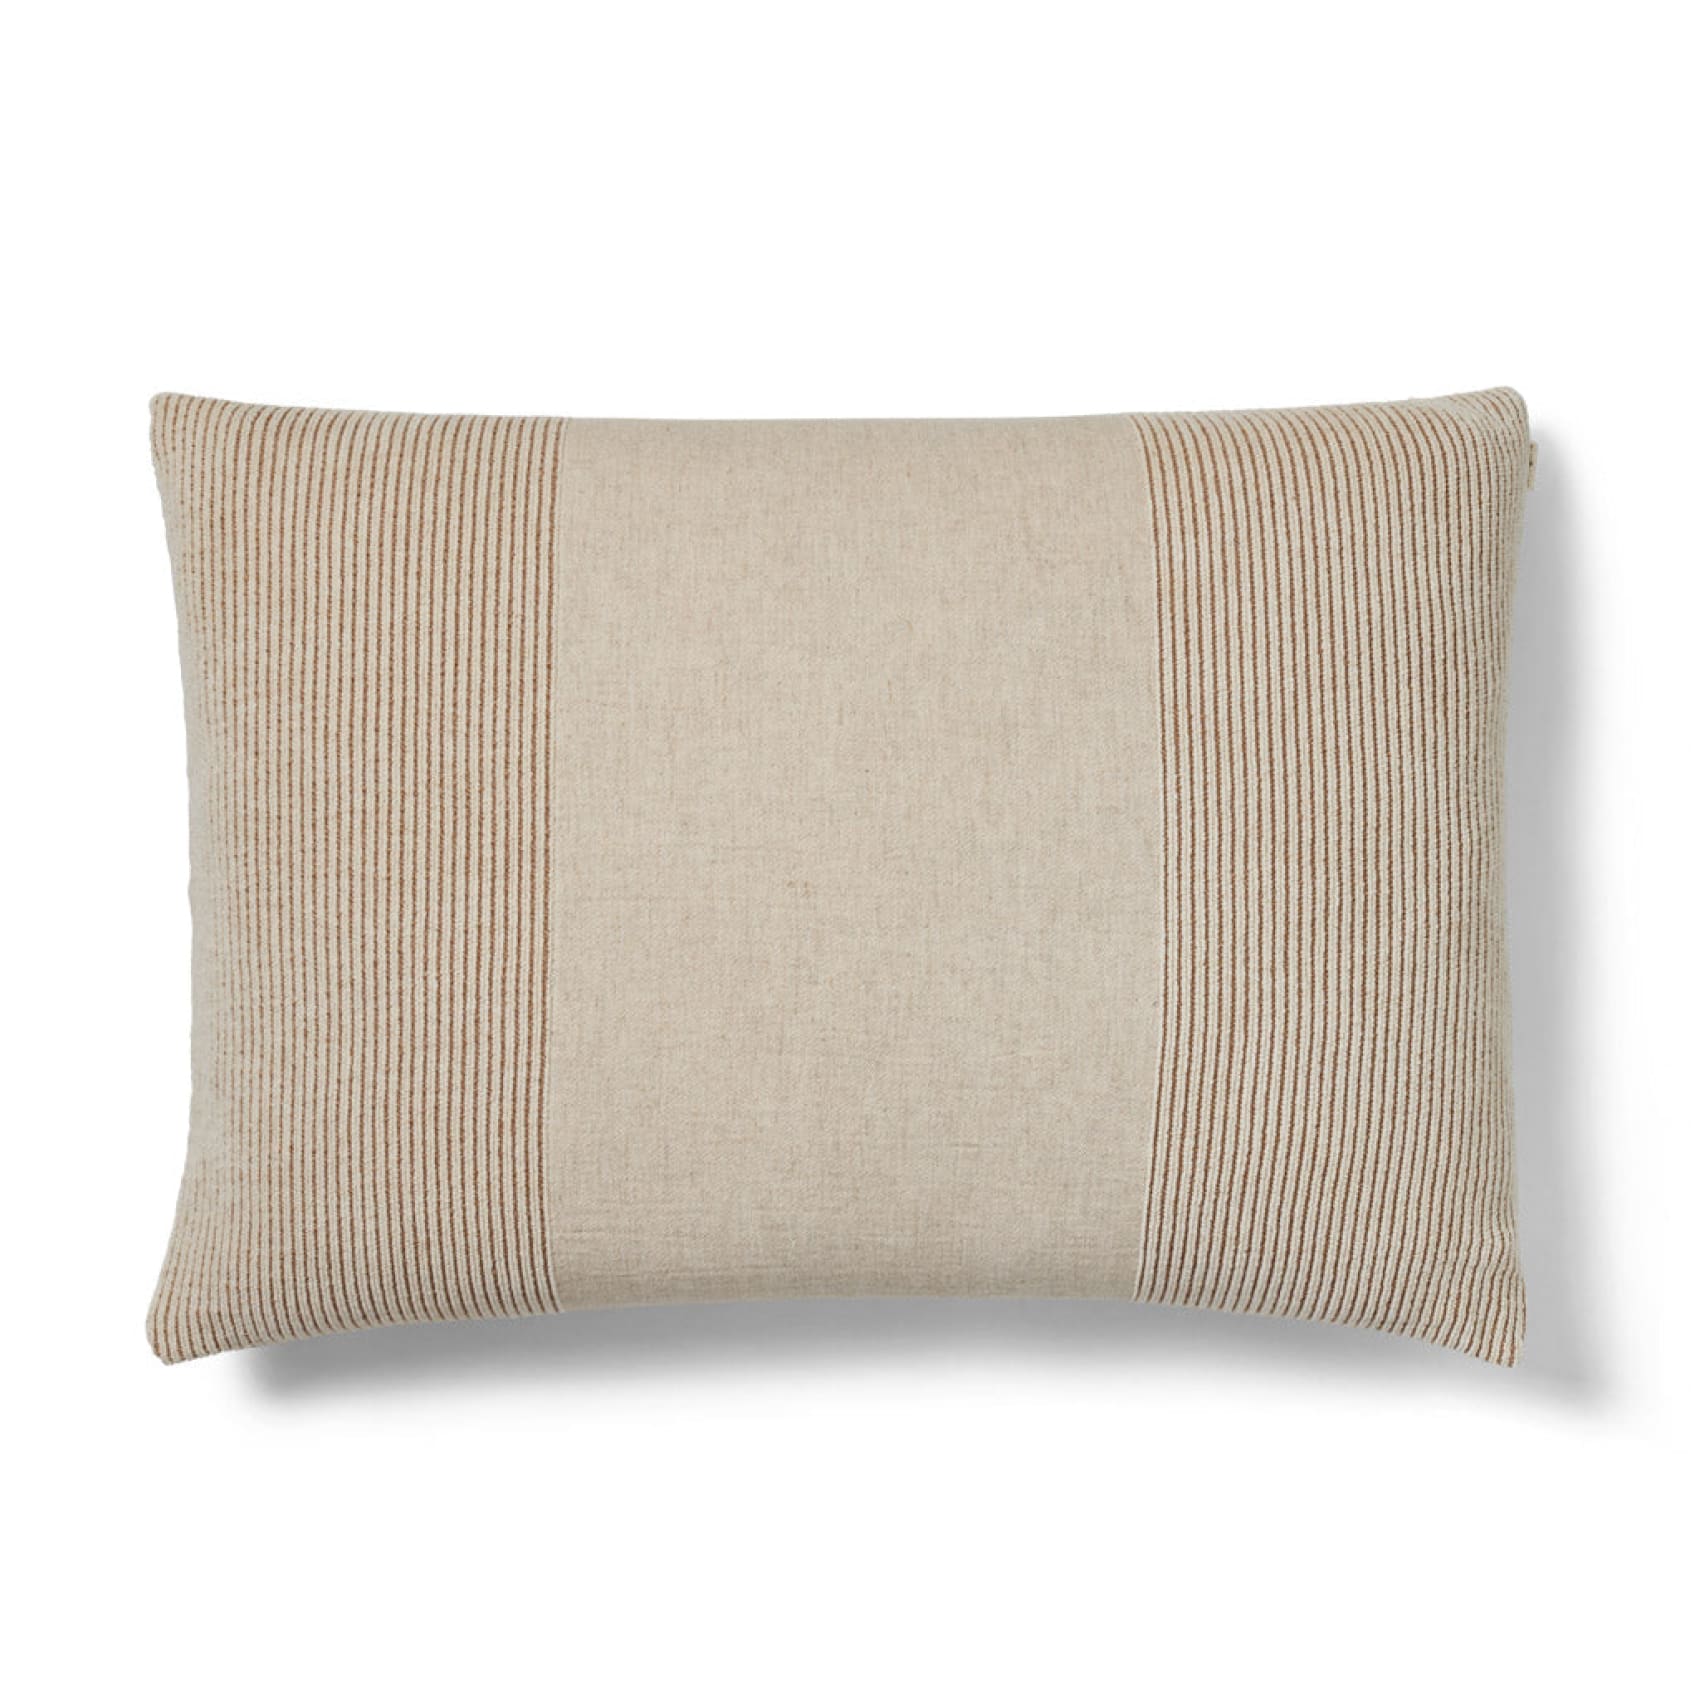 haki-organic-cotton-and-linen-cushion-bedroom-cream-cushions-living-room-neutral-luks-beige-couch-linens-269.jpg